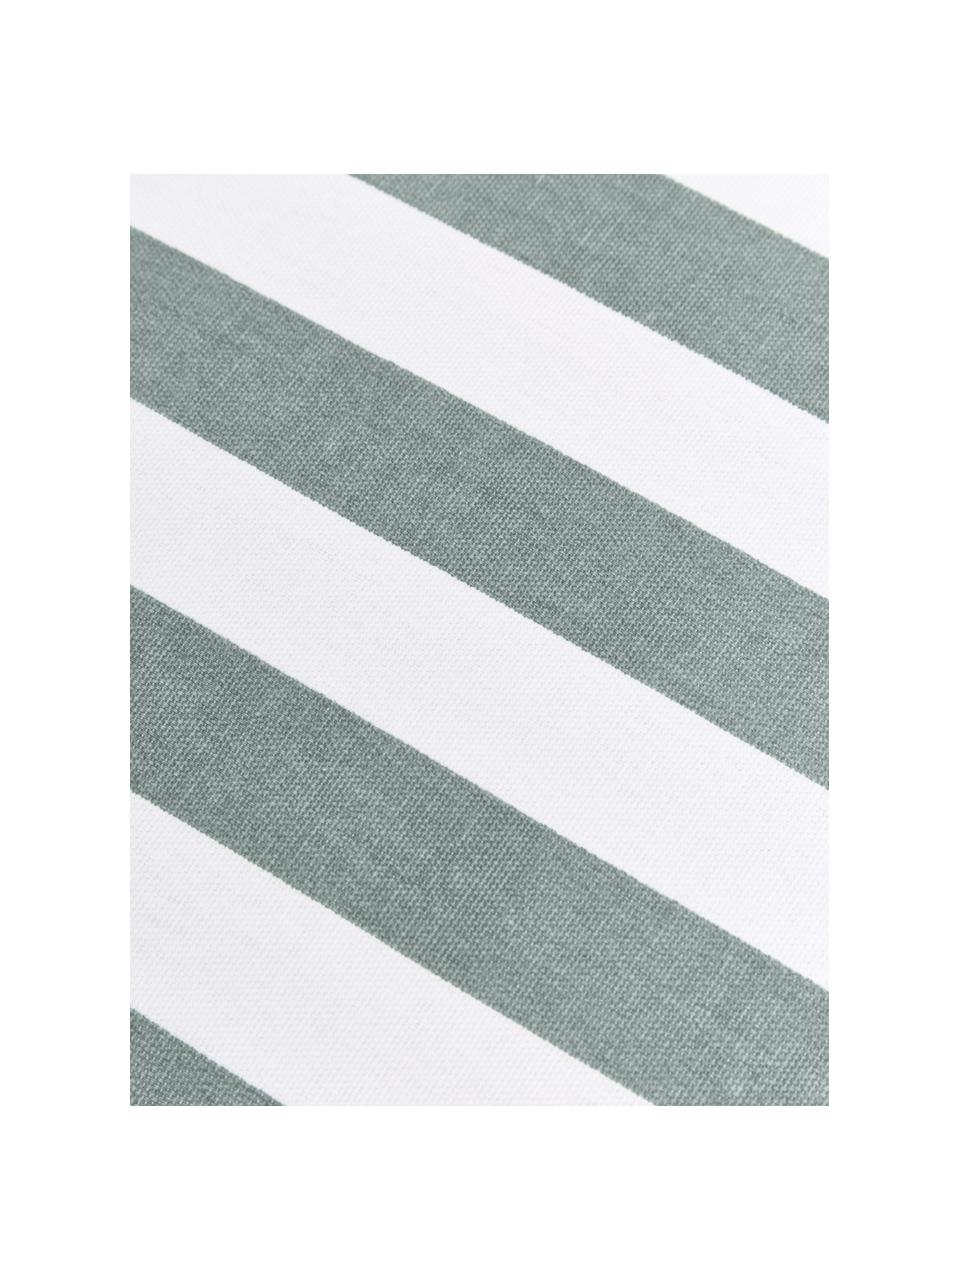 Hoog stoelkussen Timon in saliegroen/wit, gestreept, Groen, wit, B 40 x L 40 cm